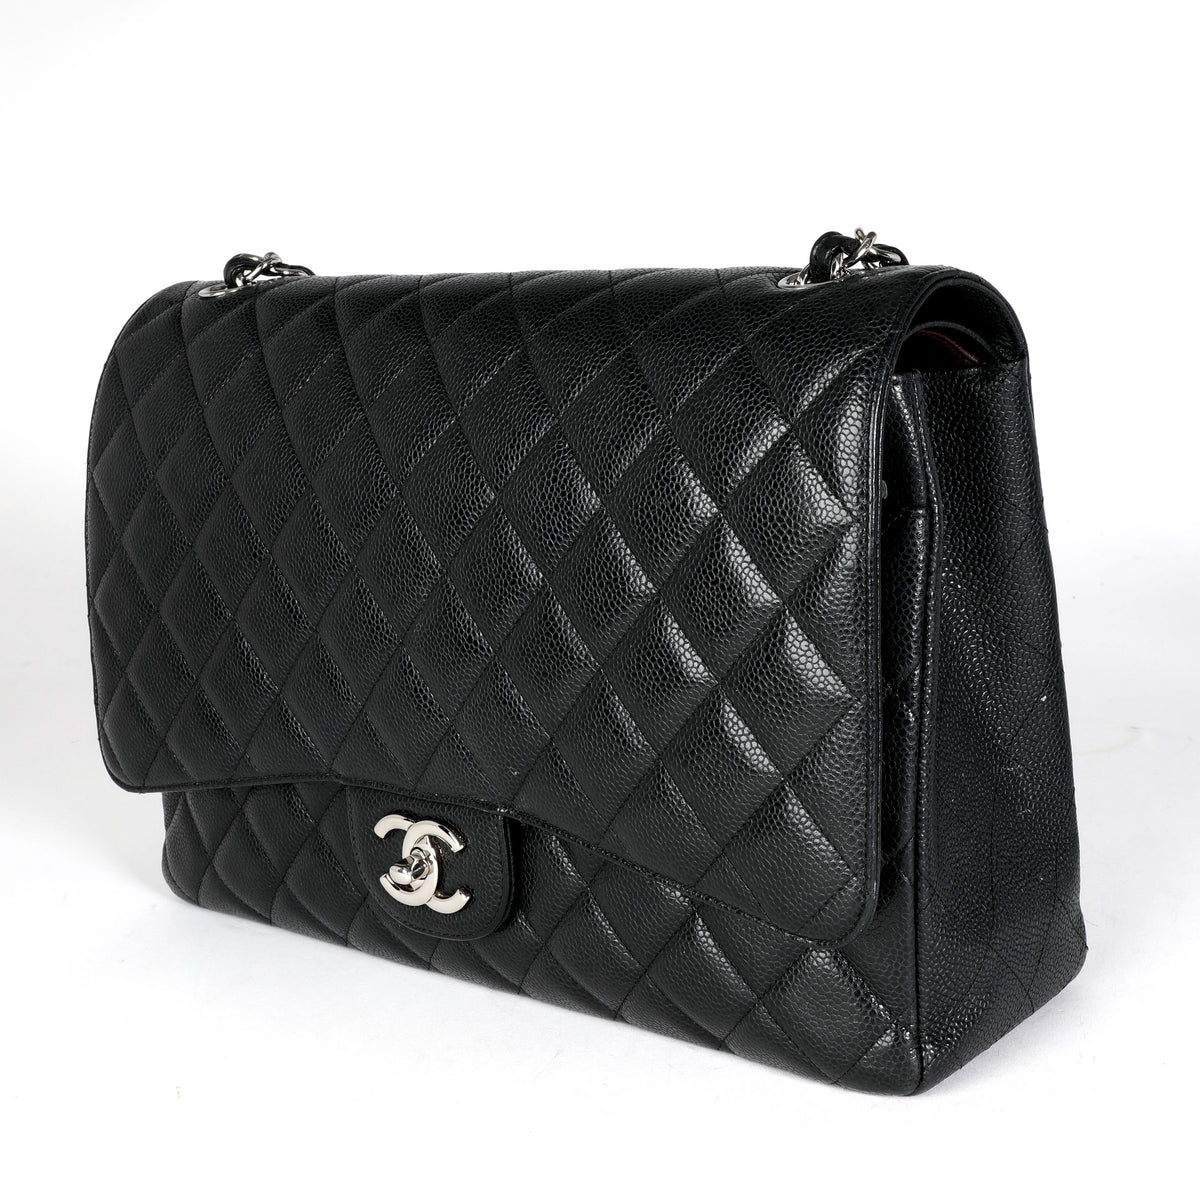 Karlie Kloss Carries Chanel in NYC - PurseBlog  Chanel classic jumbo, Chanel  bag, Chanel classic